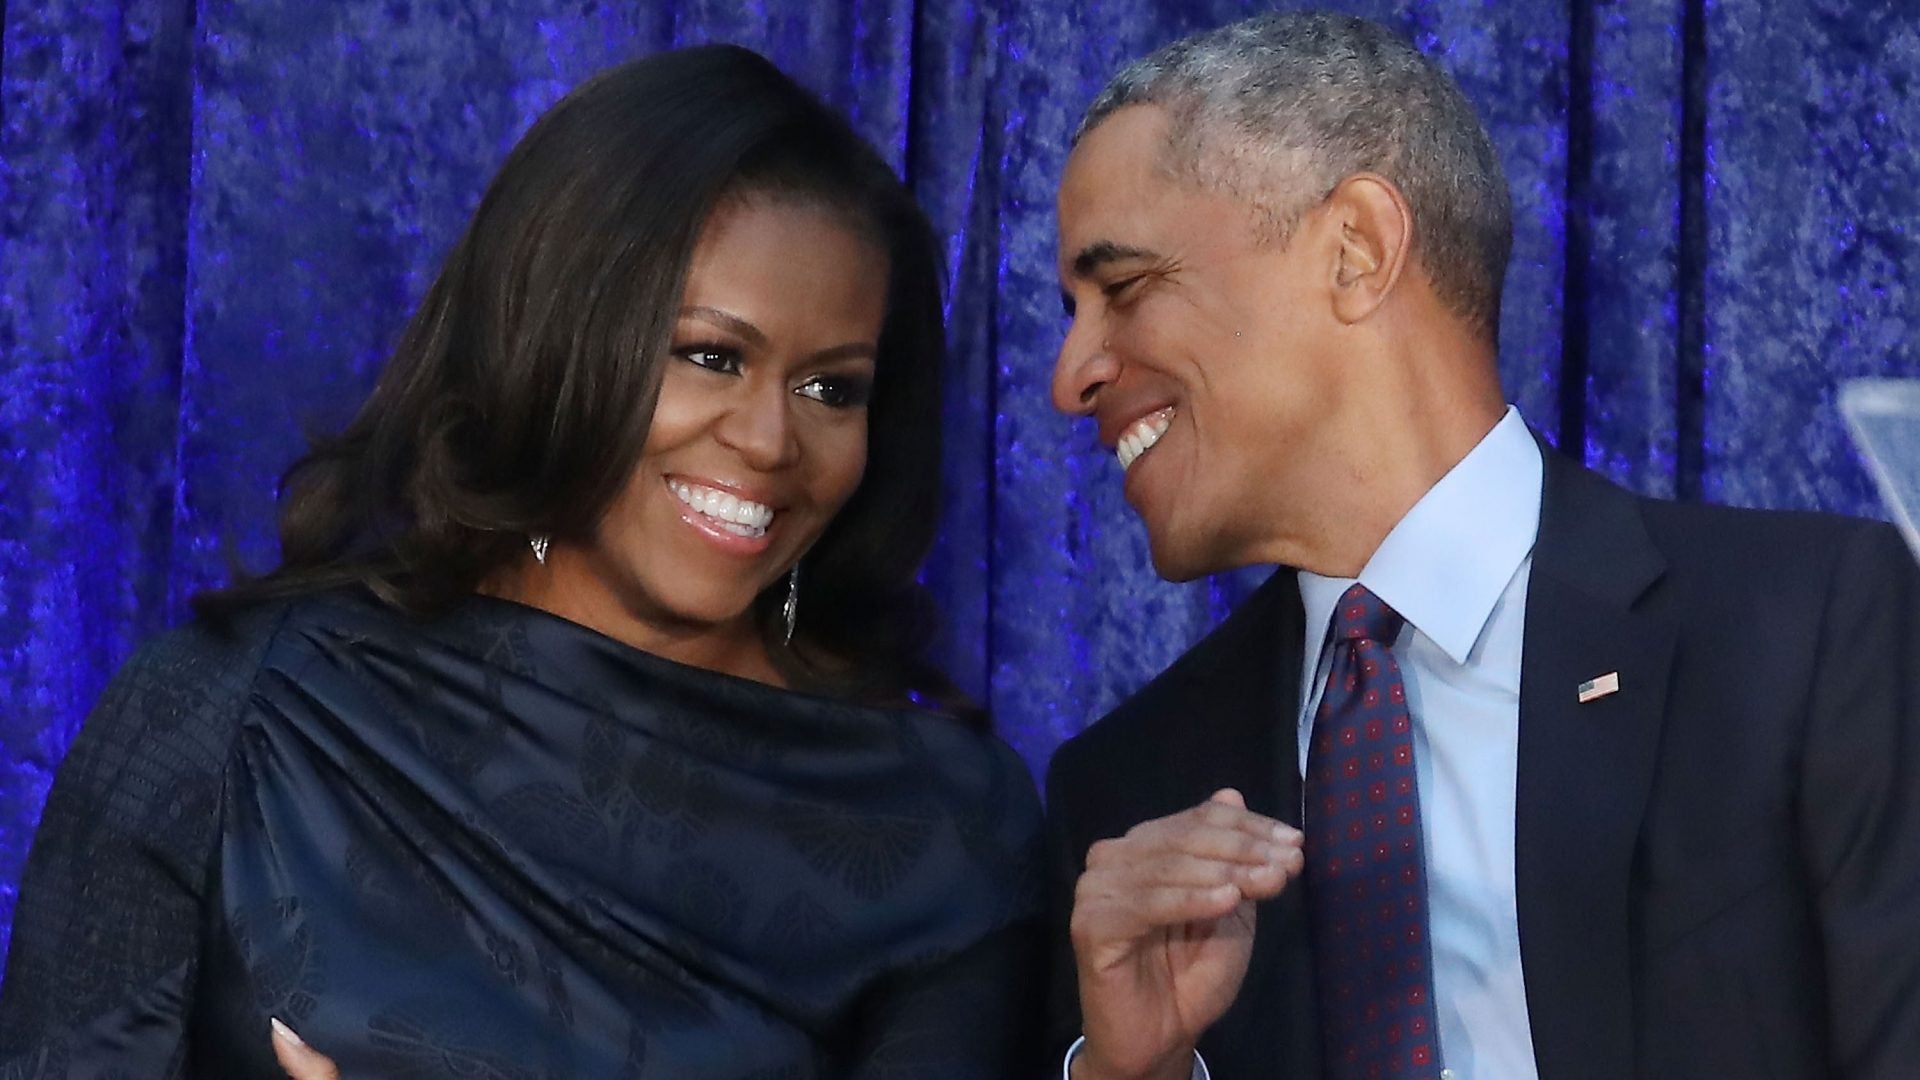 Barack Obama's Birthday Message To Michelle Obama Will Make You Melt